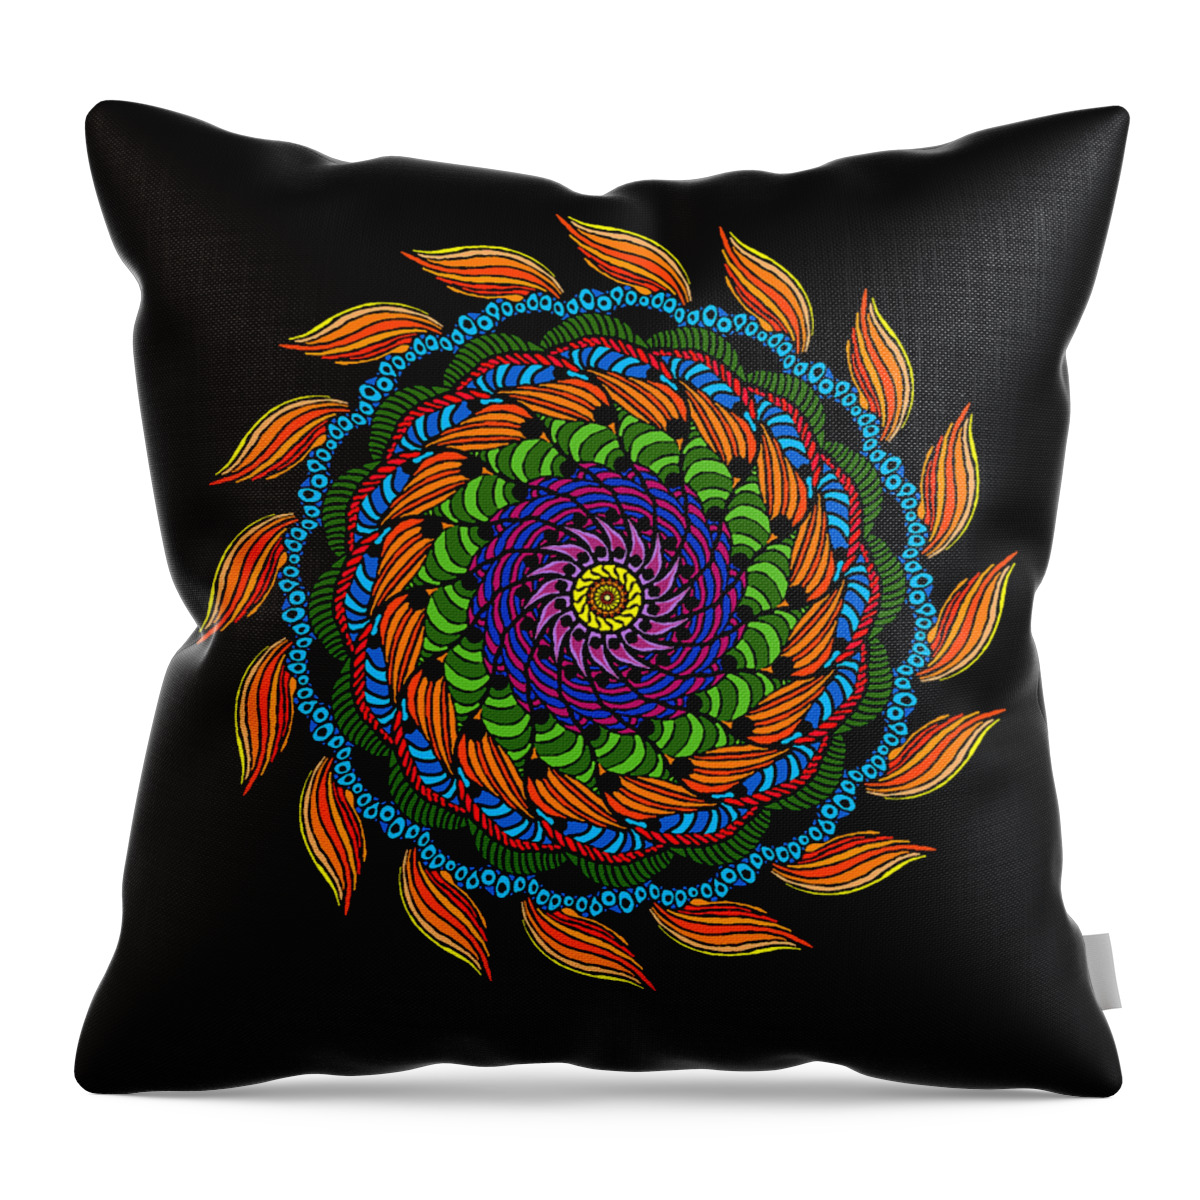 Mandala Throw Pillow featuring the digital art Fire Mandala by Becky Herrera